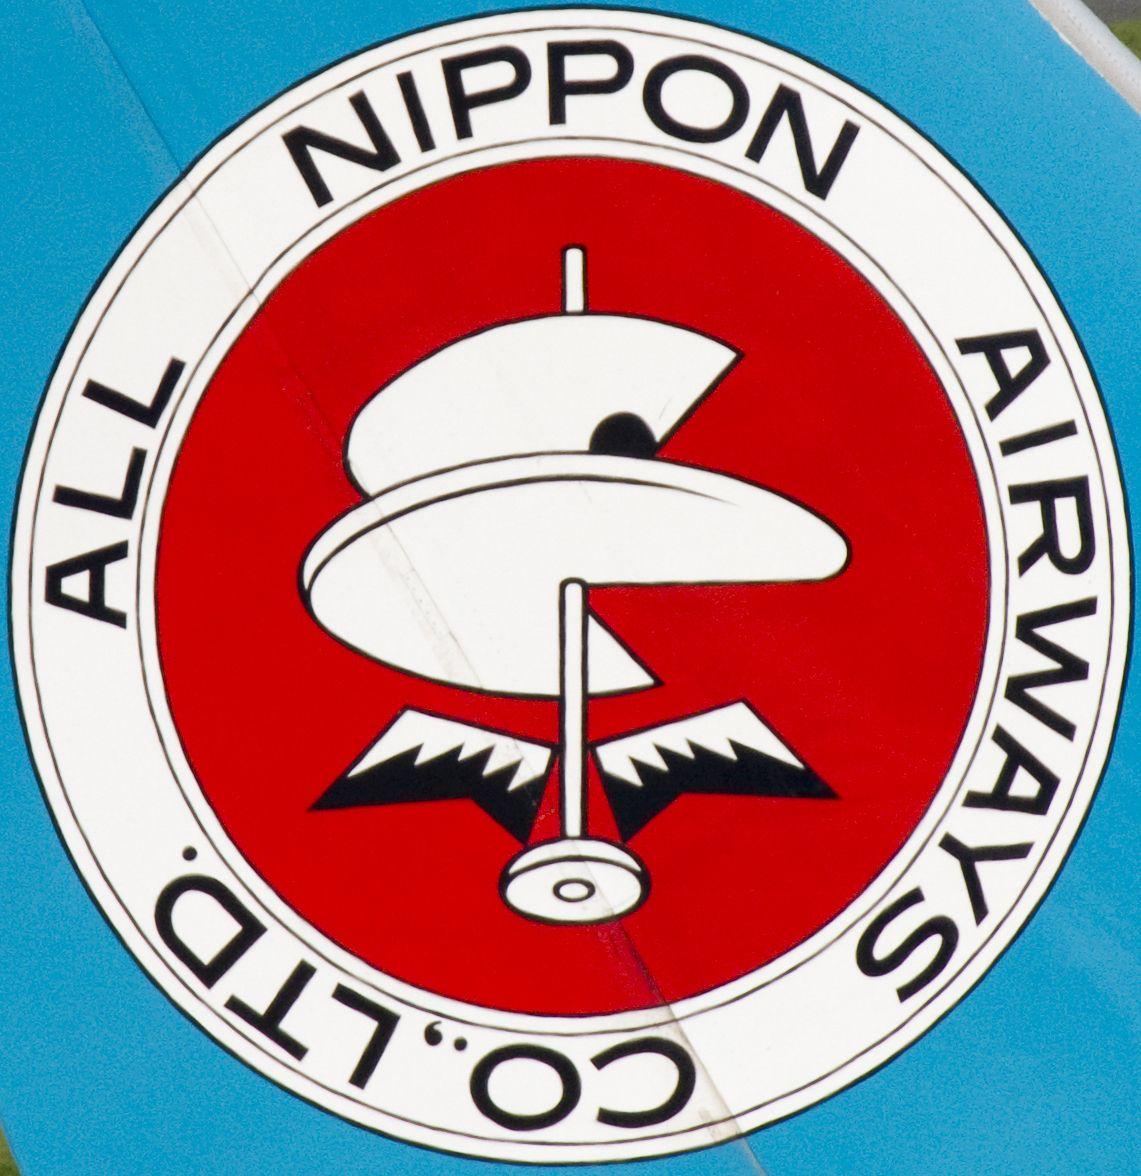 All Nippon Airways Logo - File:All Nippon Airways Old Logo.jpg - Wikimedia Commons